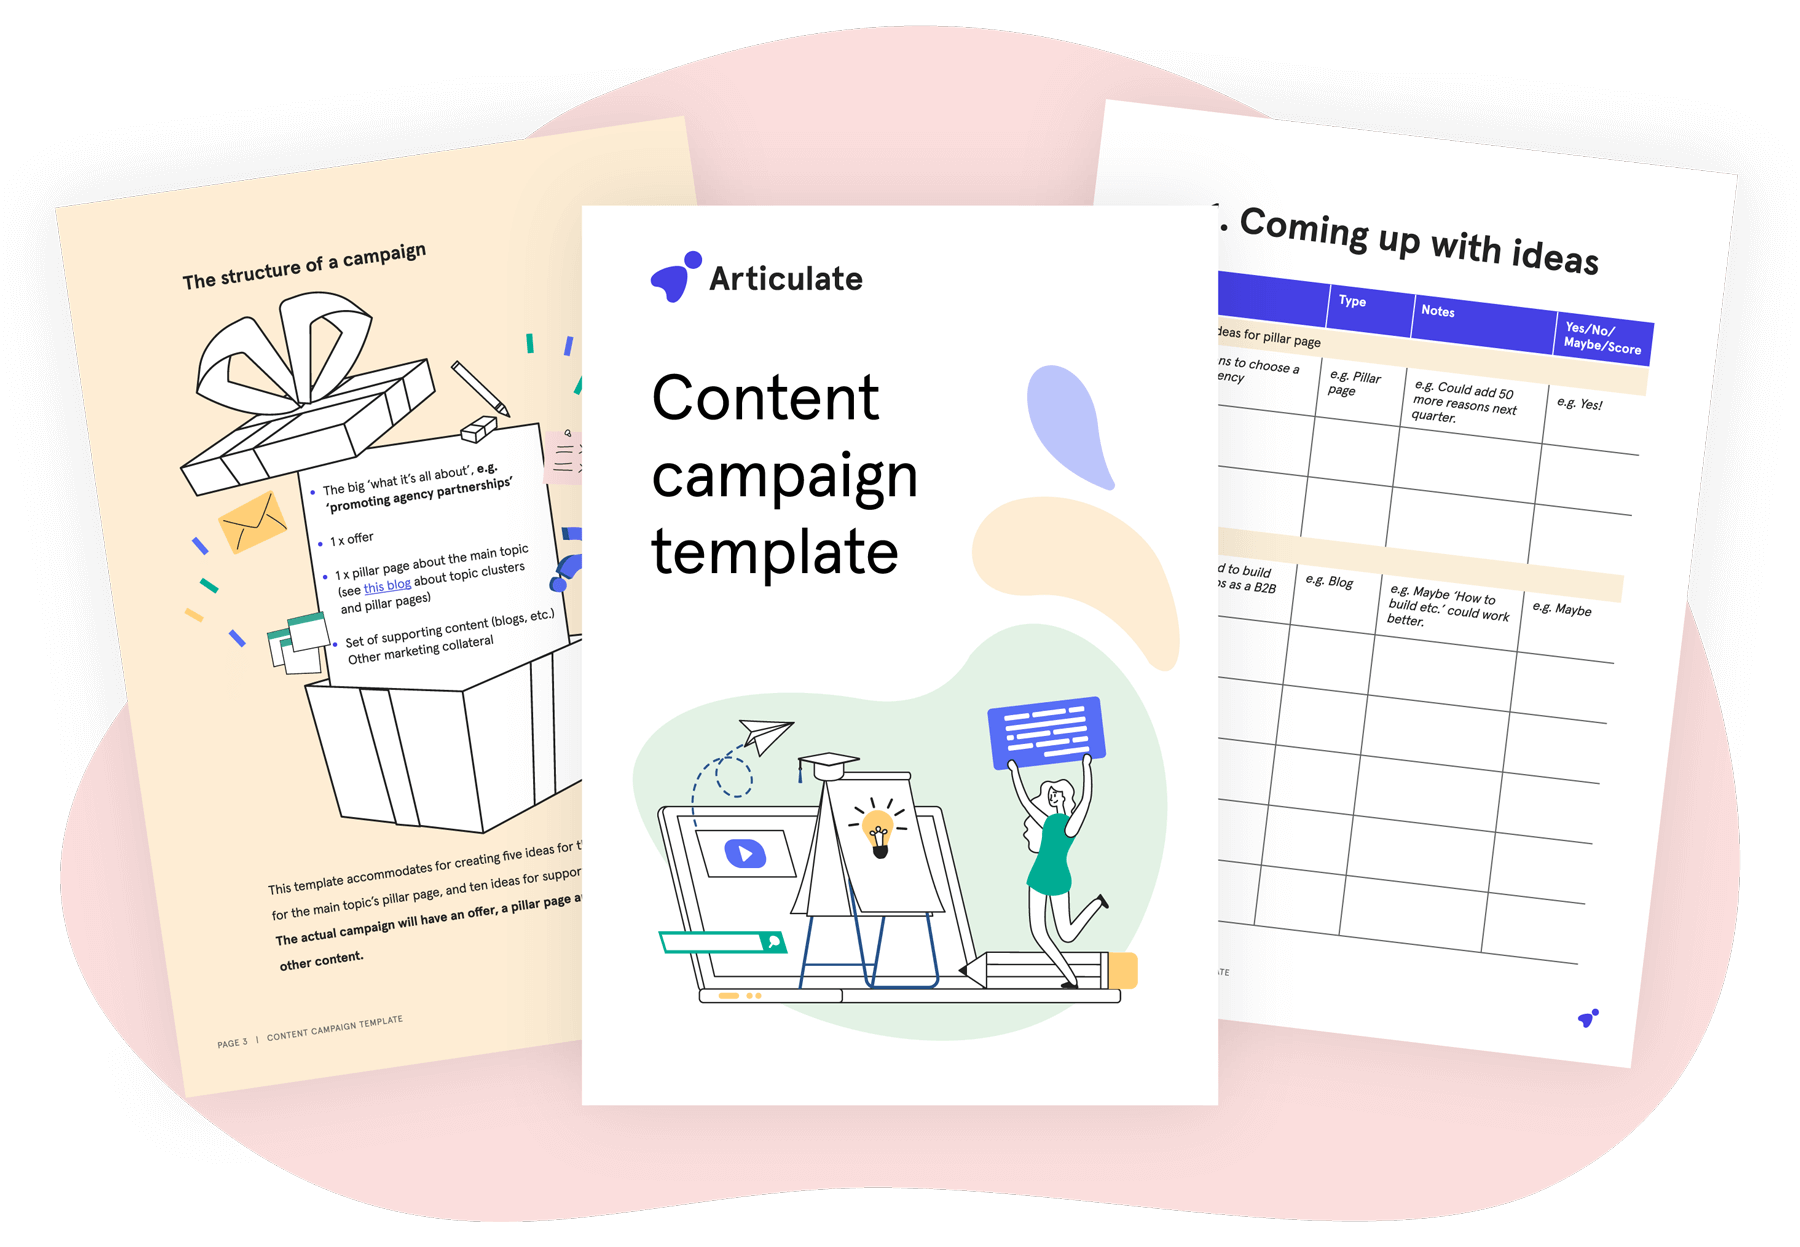 Content campaign template